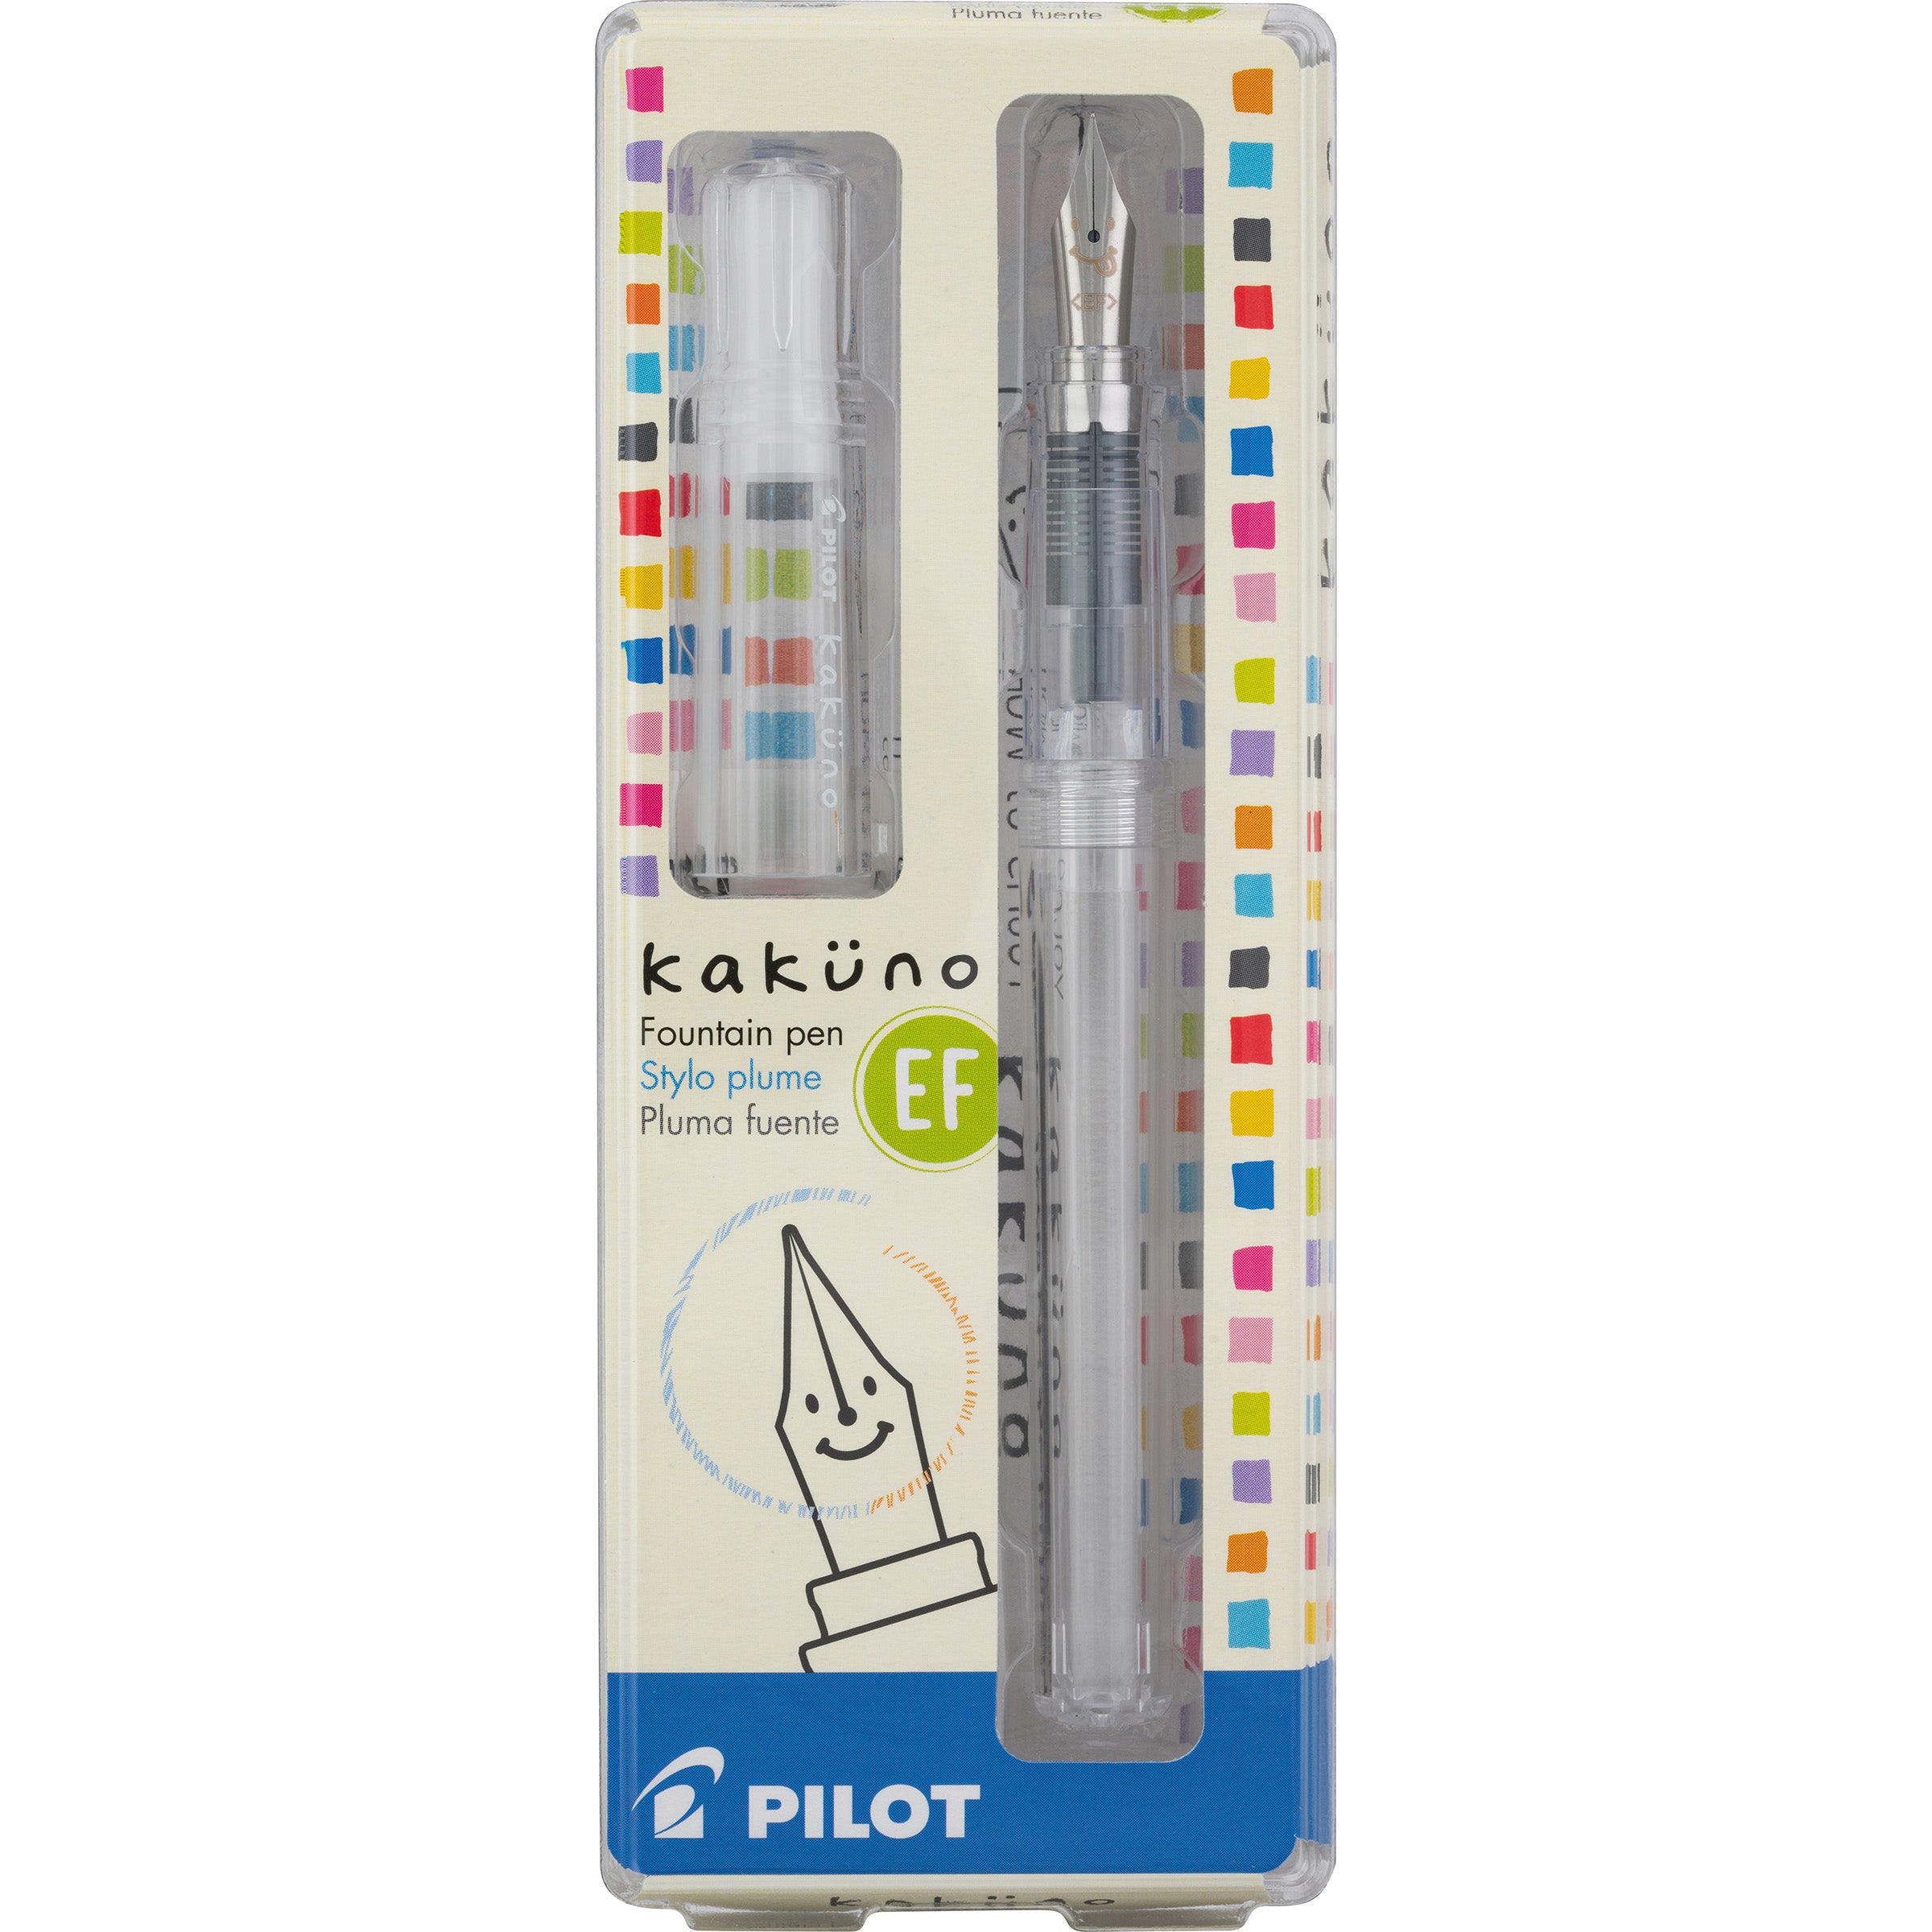 Pilot Kakuno Fountain Pen- Clear Body with Clear Cap- Extra Fine Nib